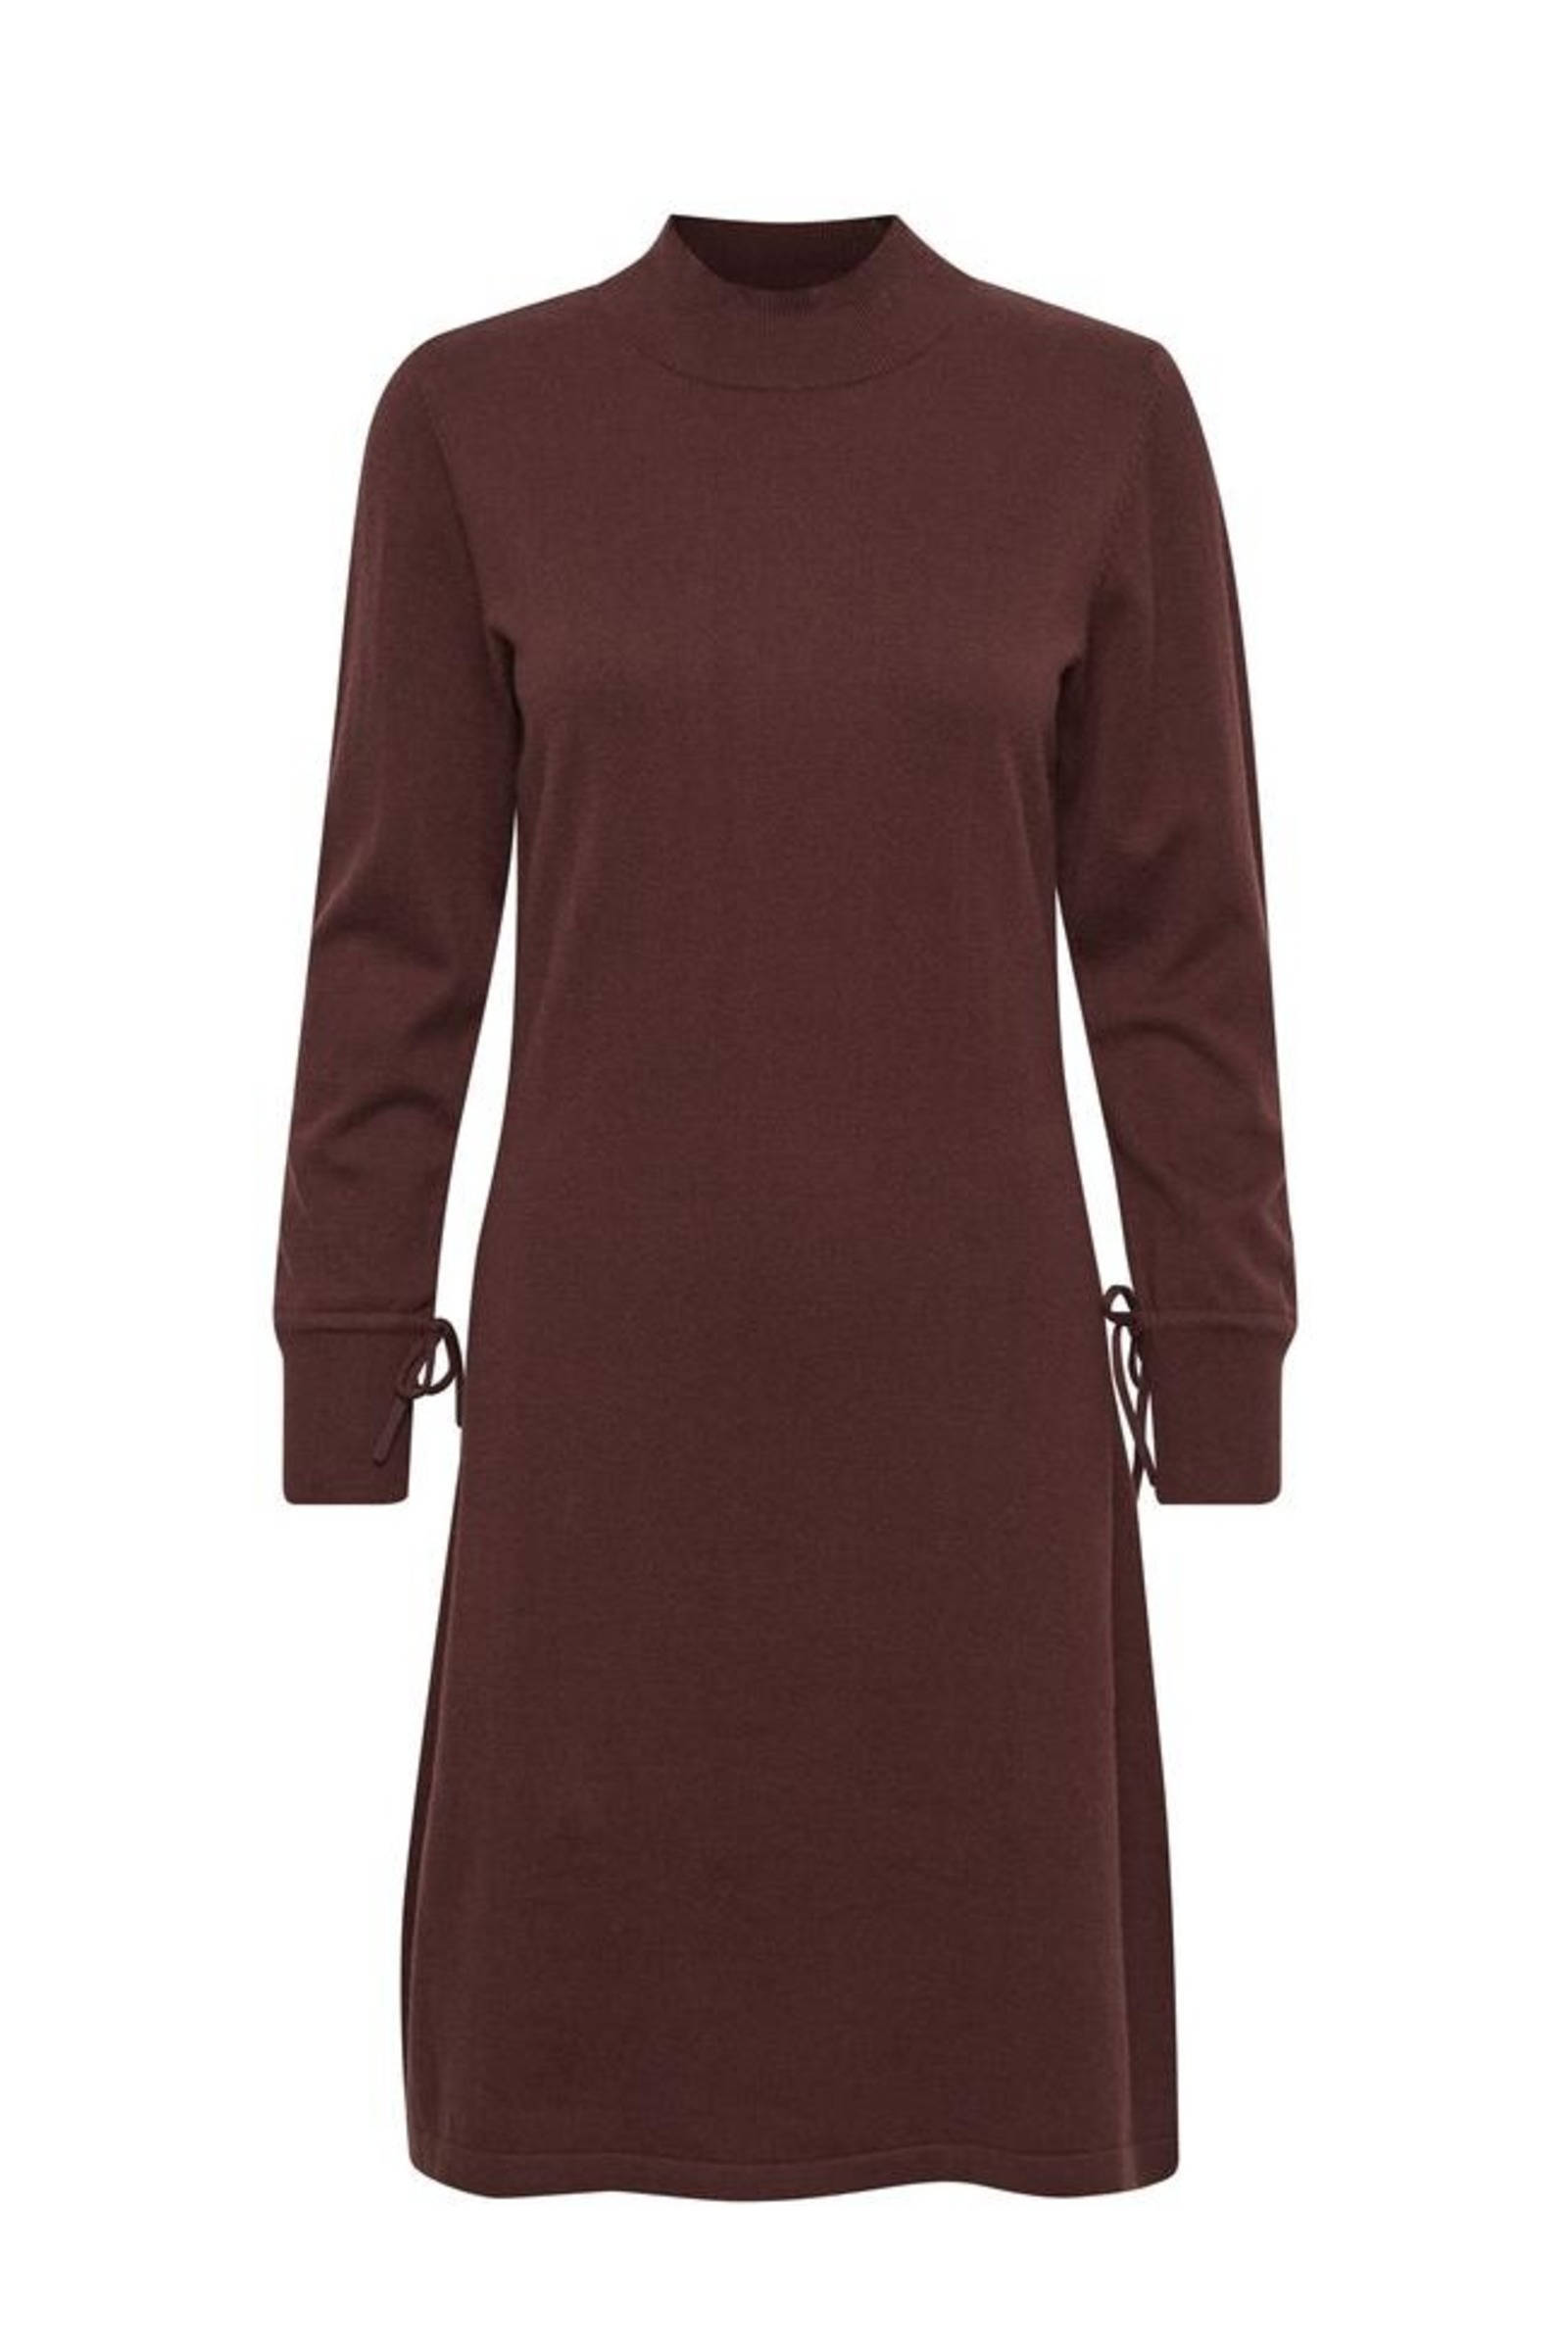 Cream A-lijn jurk BellaCR Dress bruin online kopen